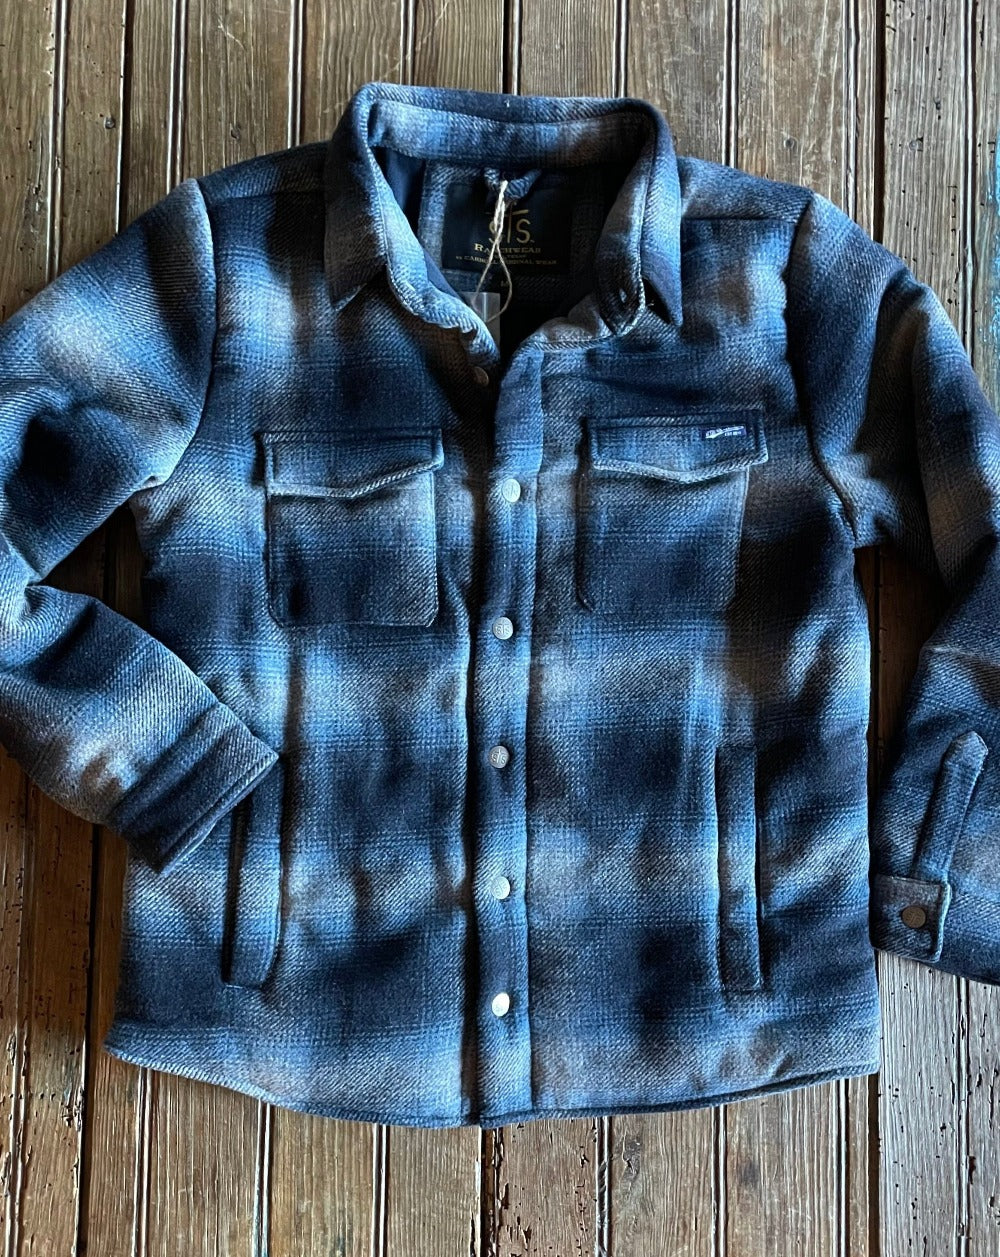 Ludlow Shirt Jacket - SALE